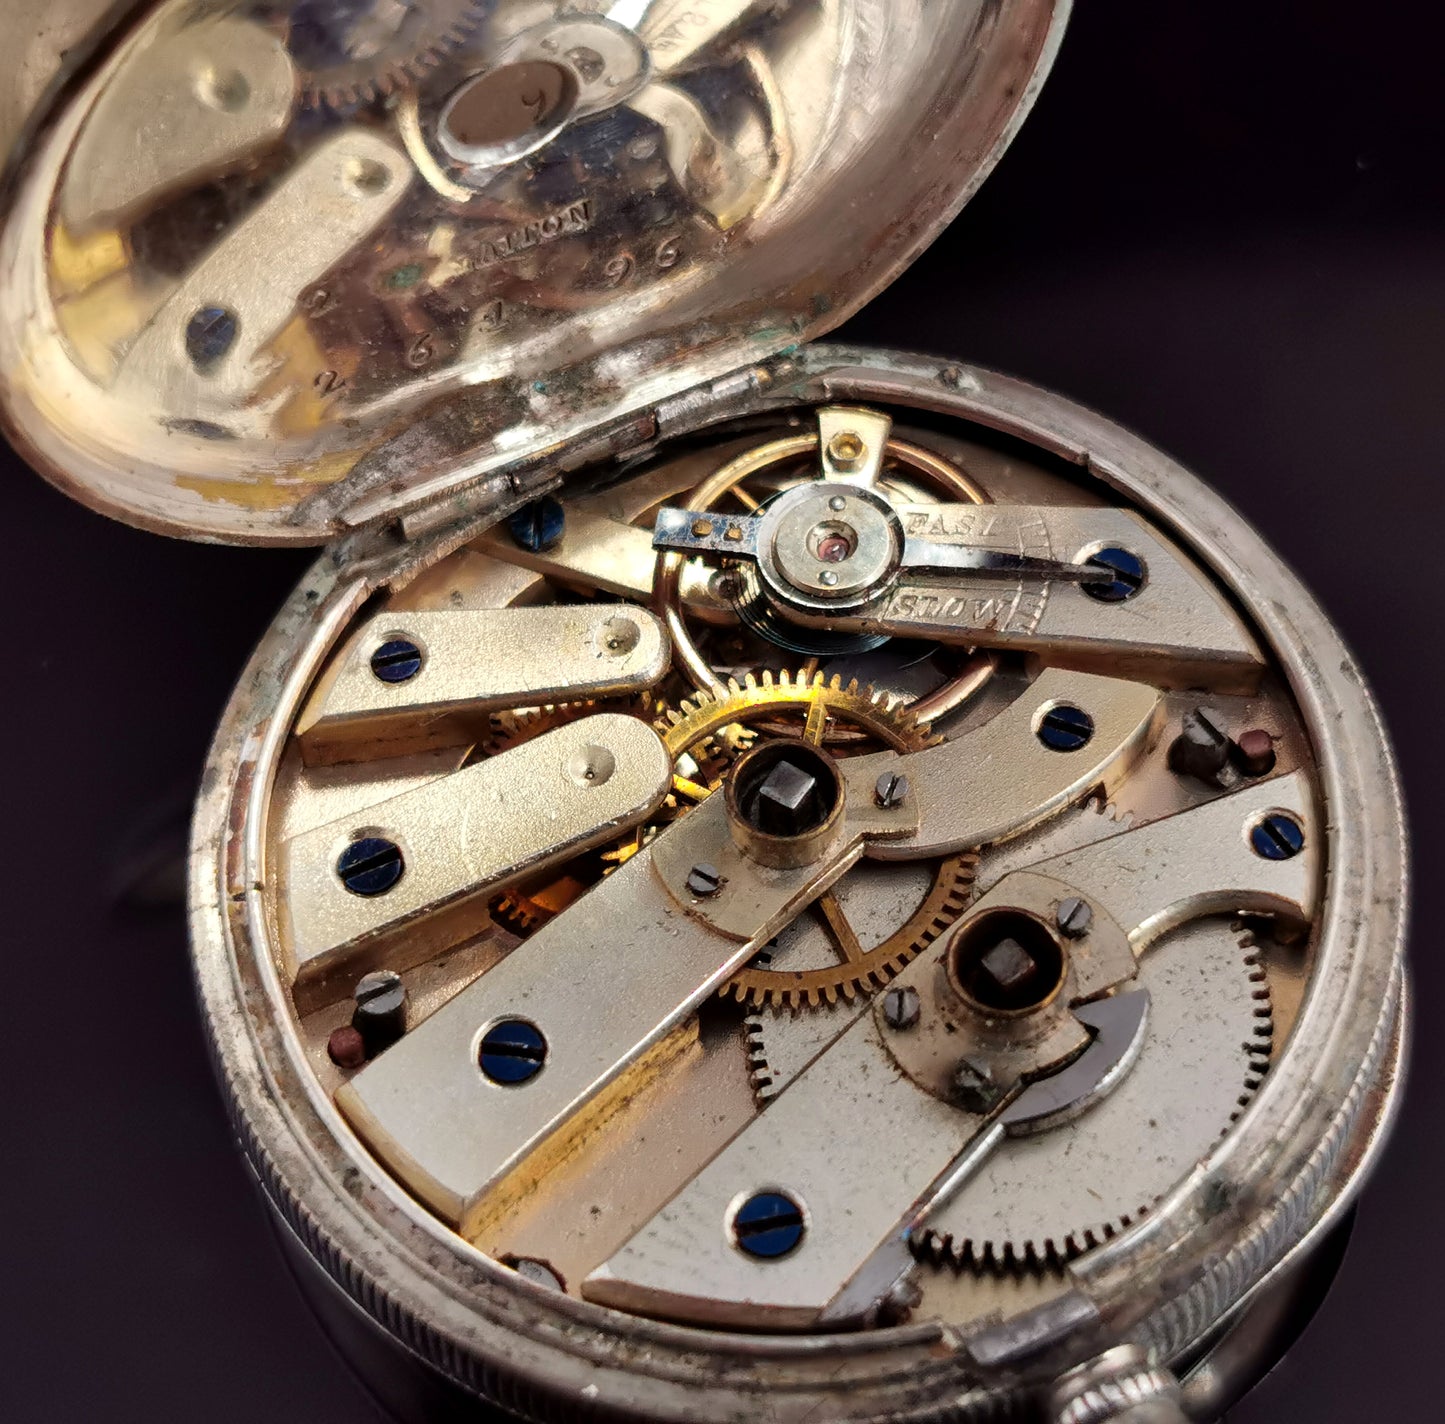 Antique silver fob watch, Ladies pocket watch, Edwardian